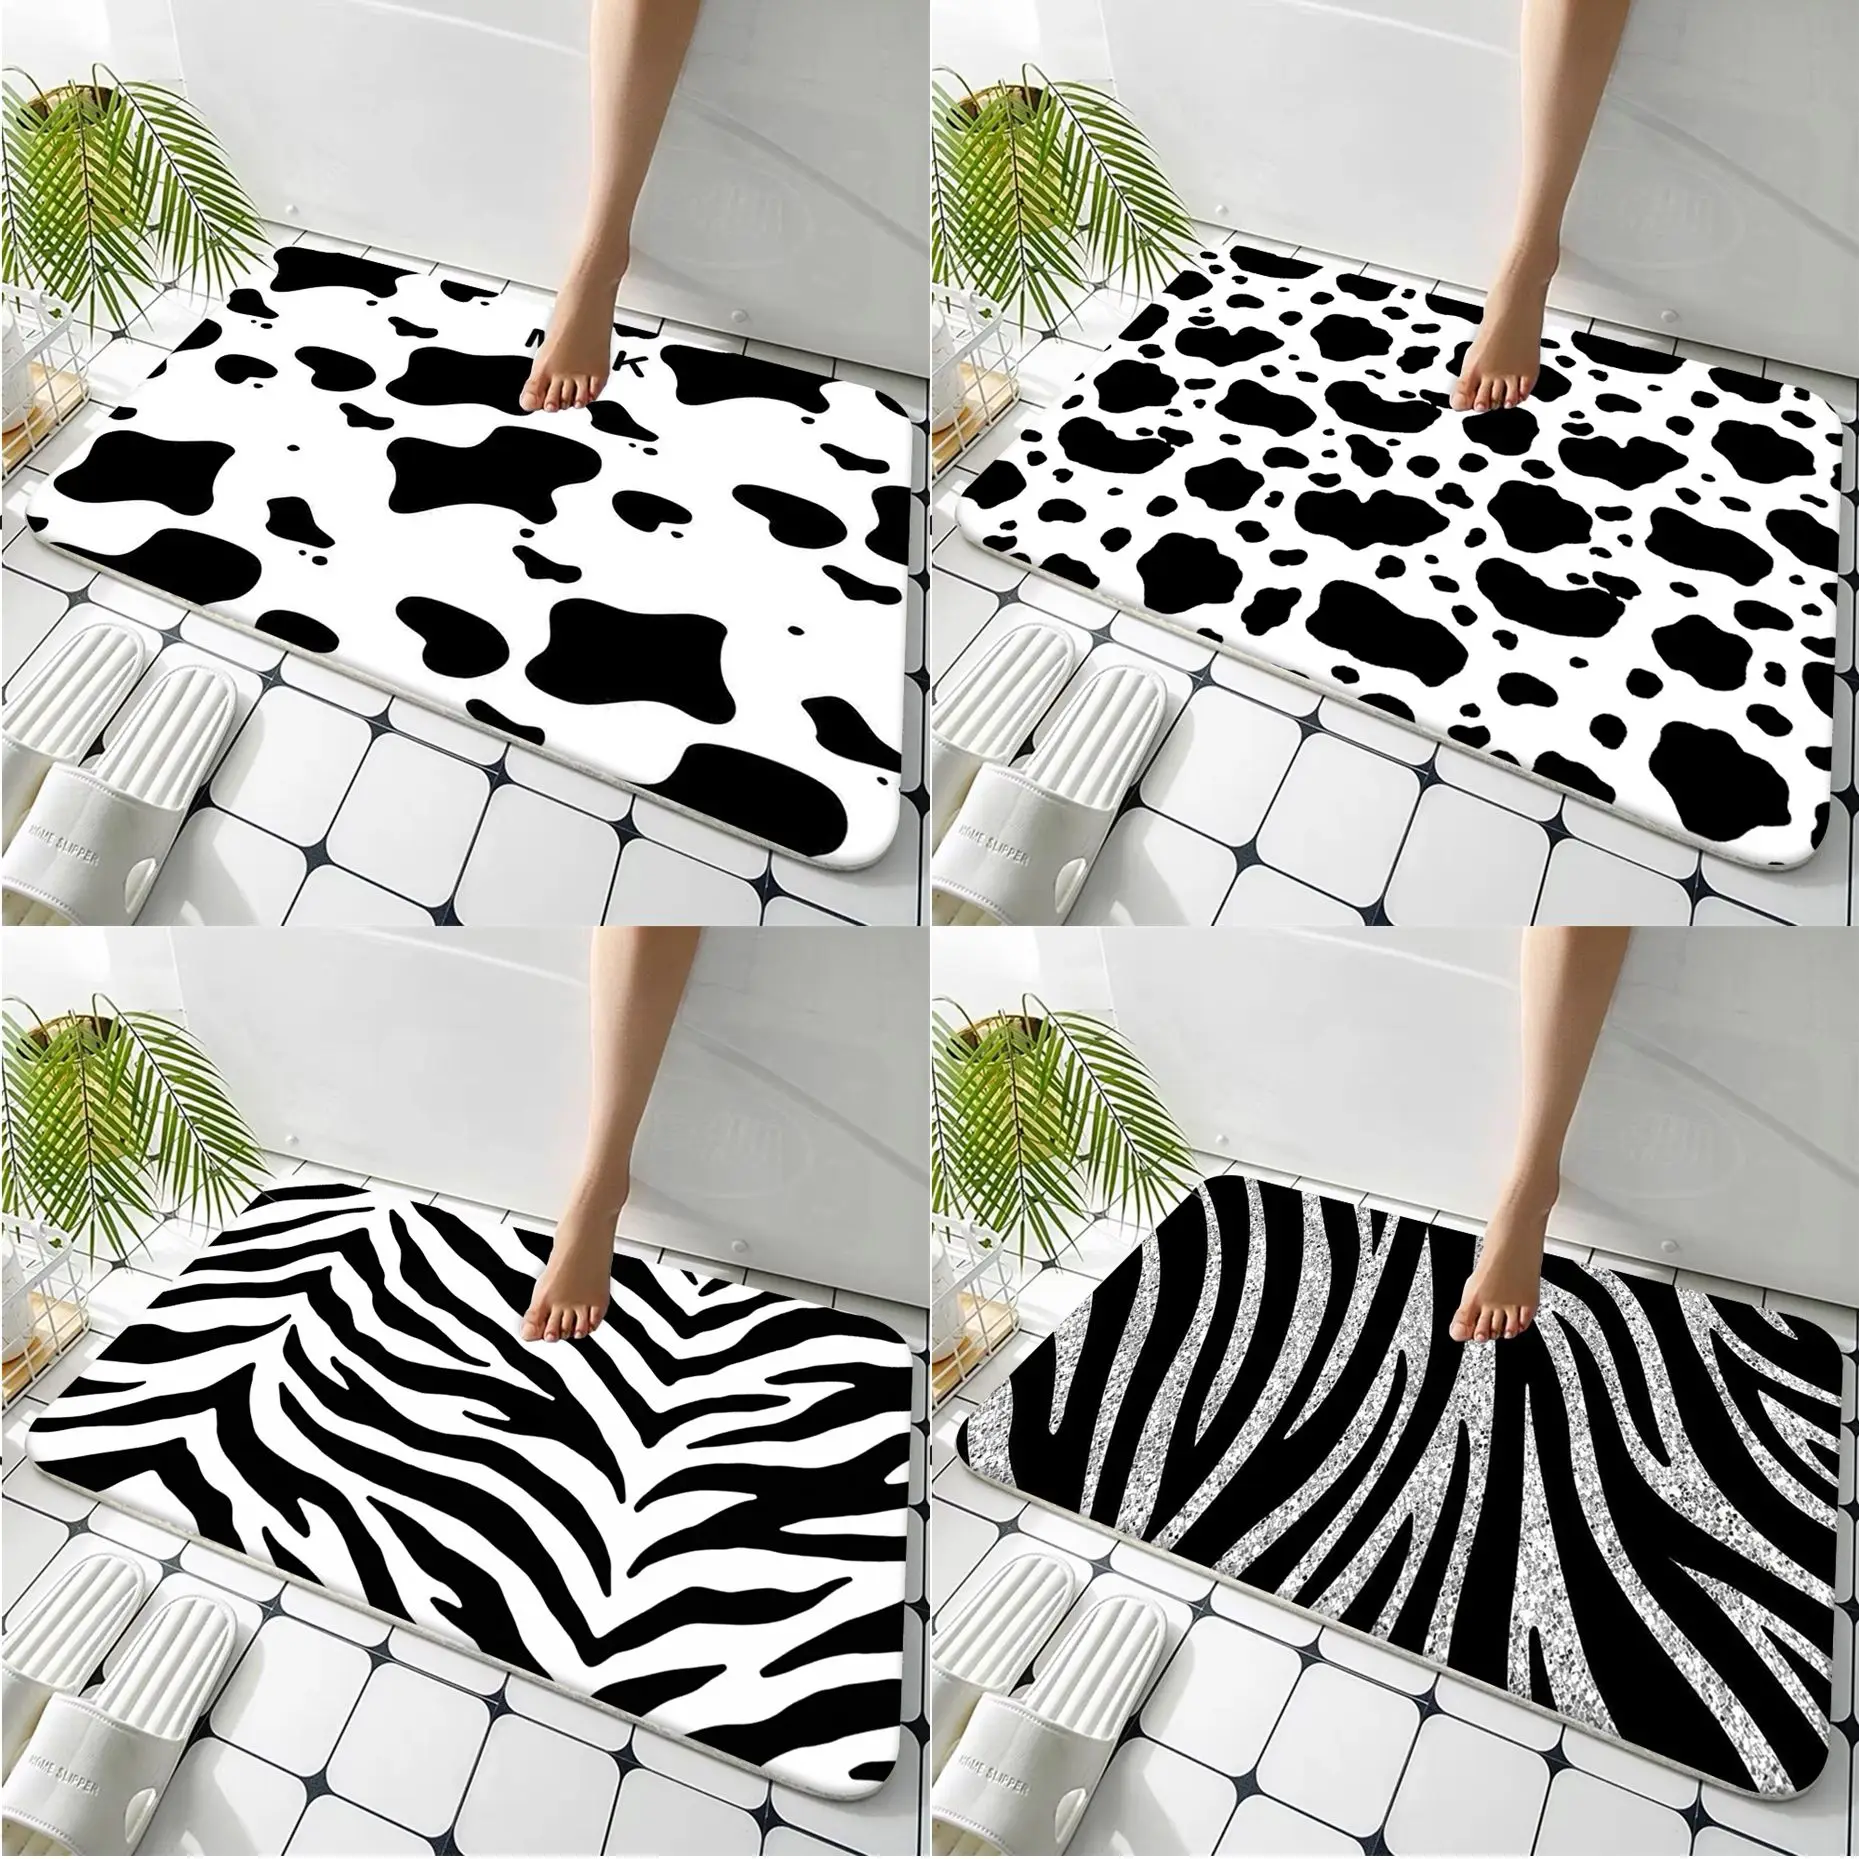 

Black and white Dalmatian Cow zebra texture Floor Mat Bathroom Decor Carpet Non-Slip For Living Room Kitchen welcome Doormat